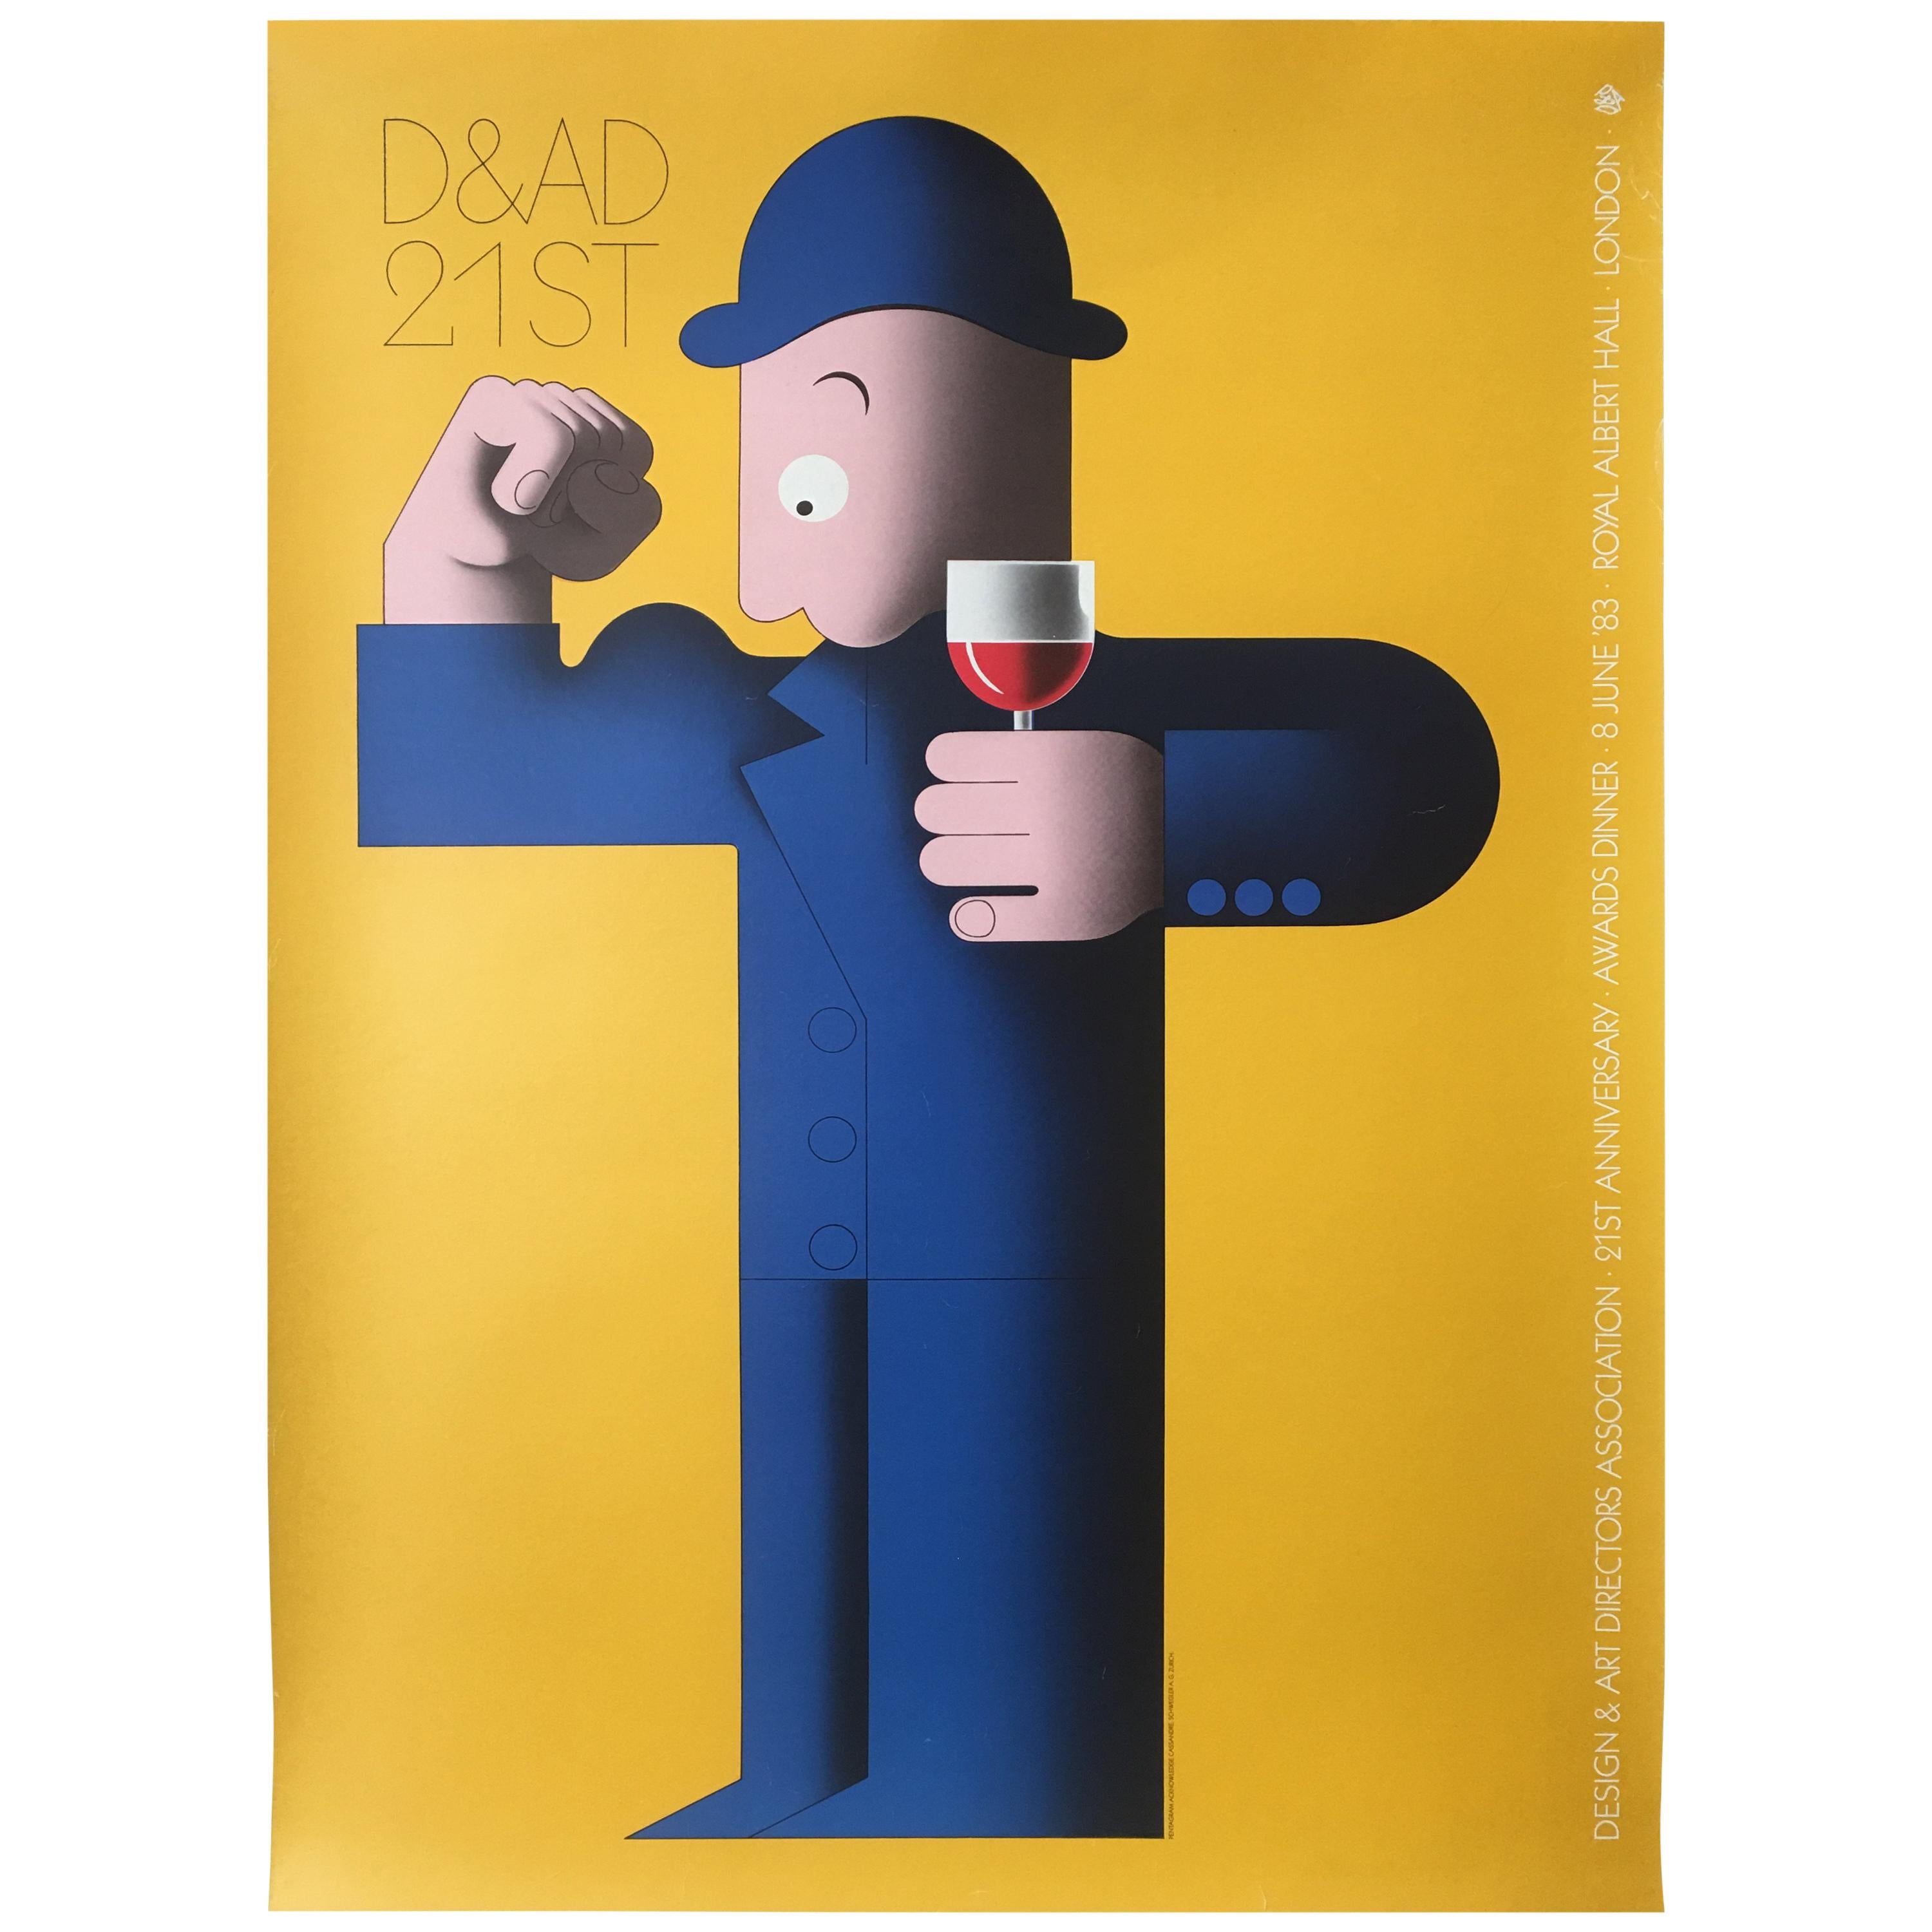 Original Vintage French Wine Poster 'D&AD 21st Royal Albert Hall'